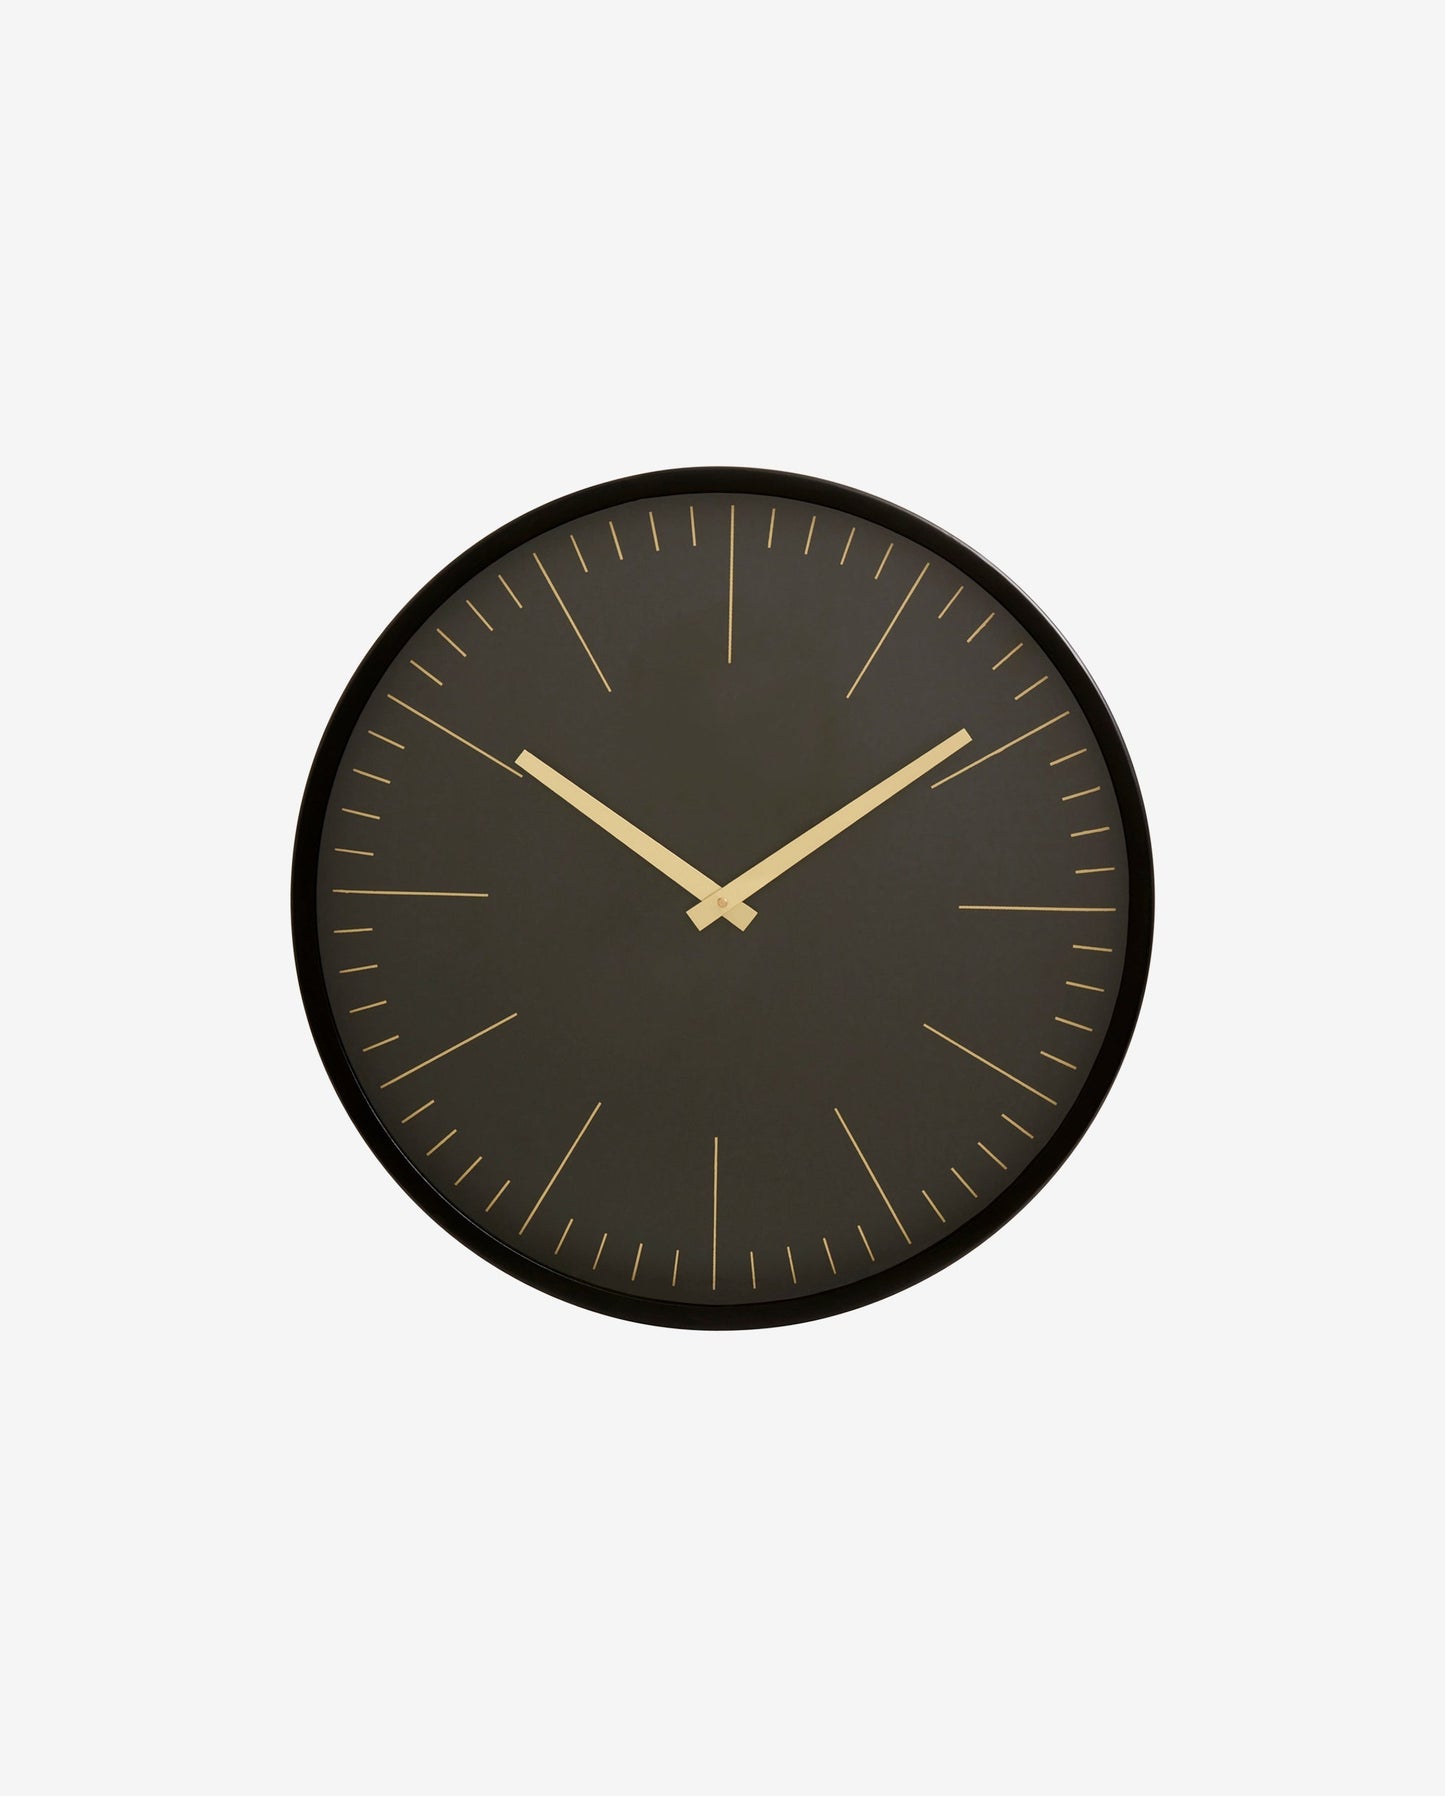 Nordal ONYX, wall clock, black frame w/gold